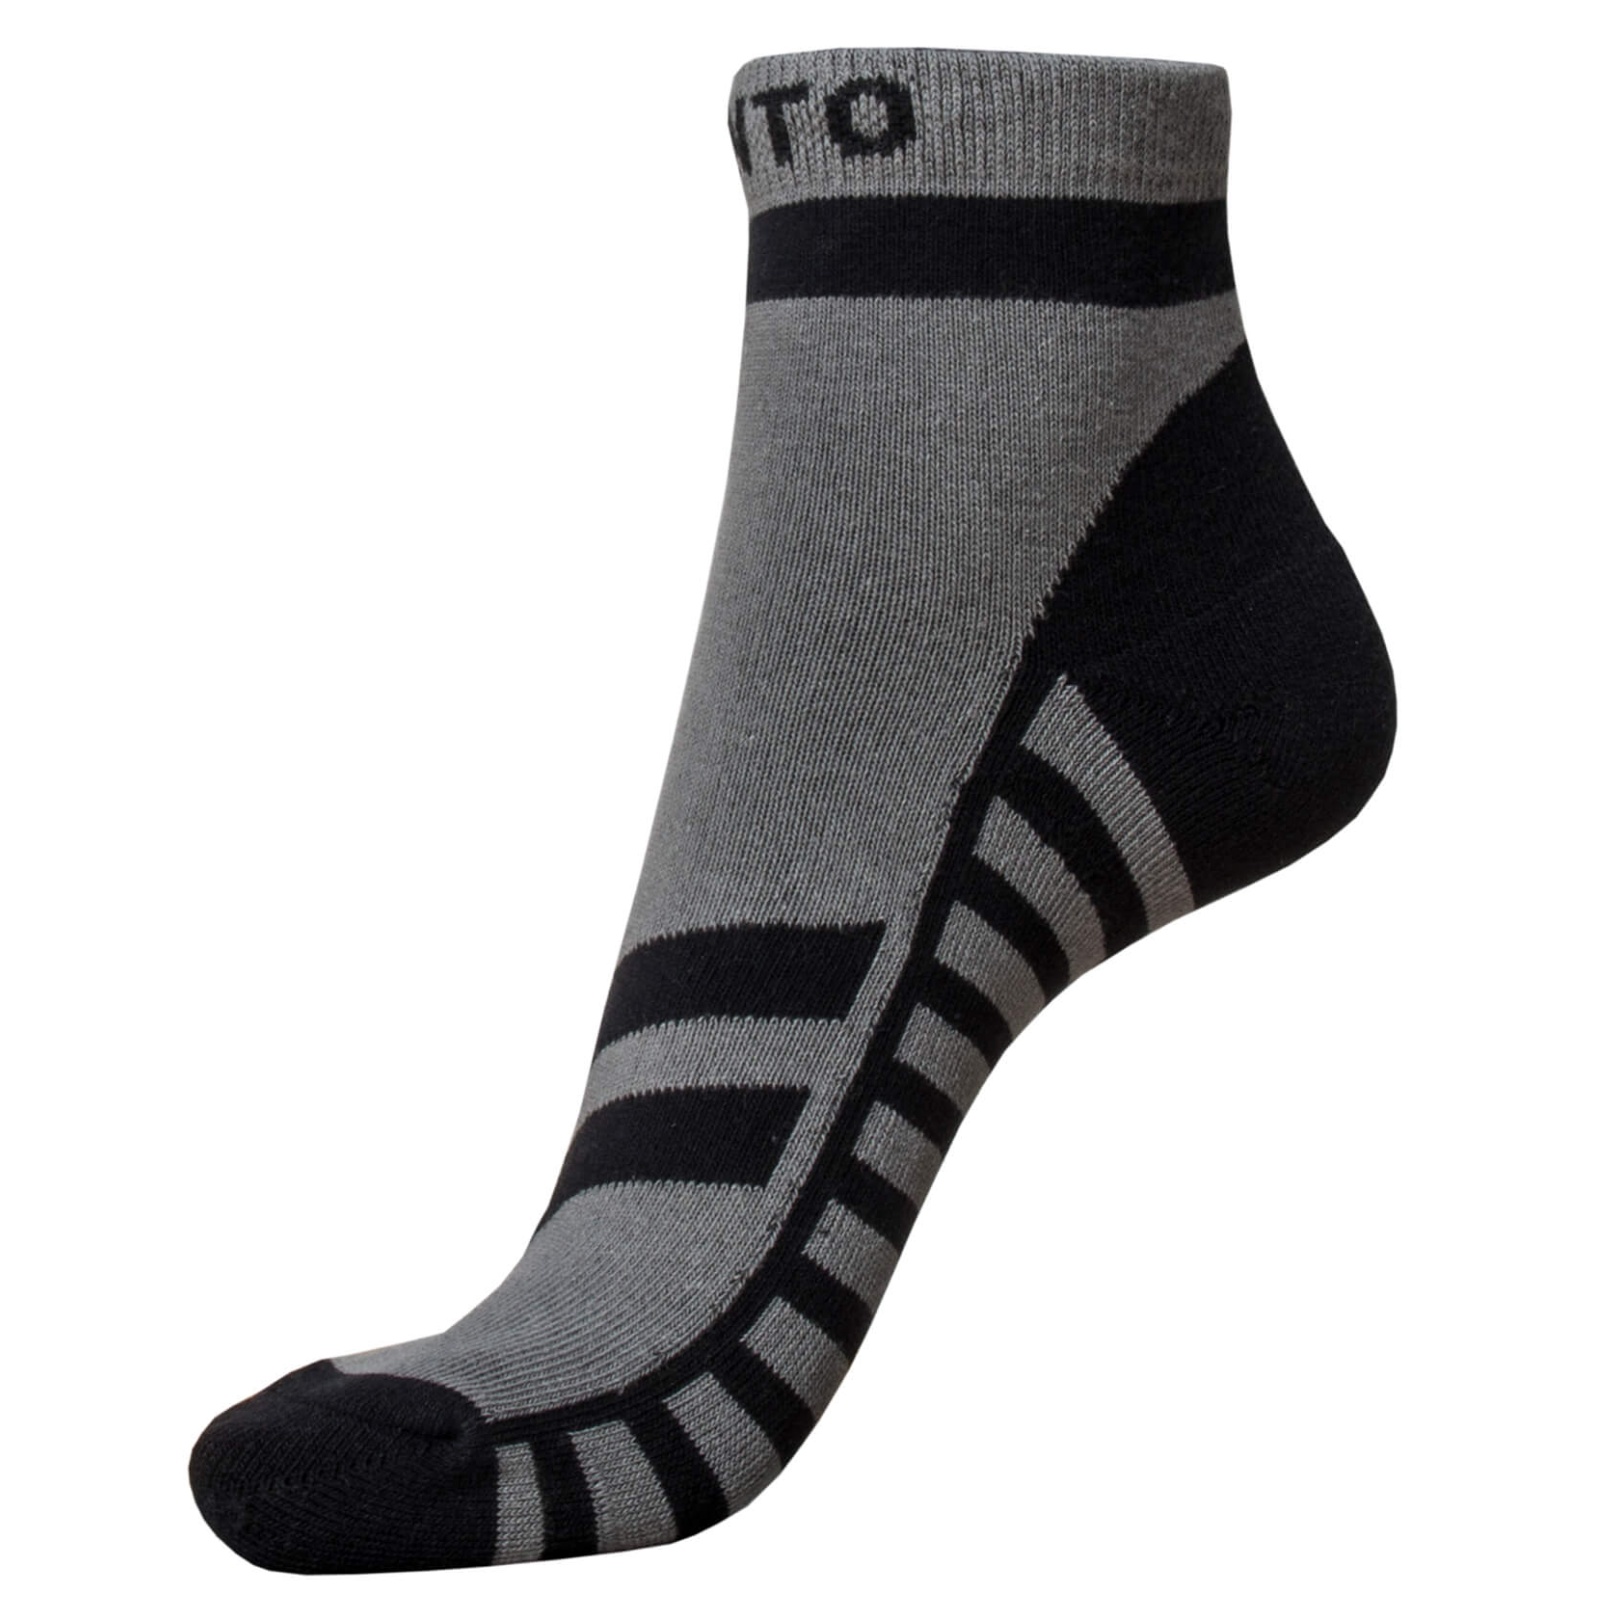 Ponožky RUNTO Market šedé, vel. 35-38